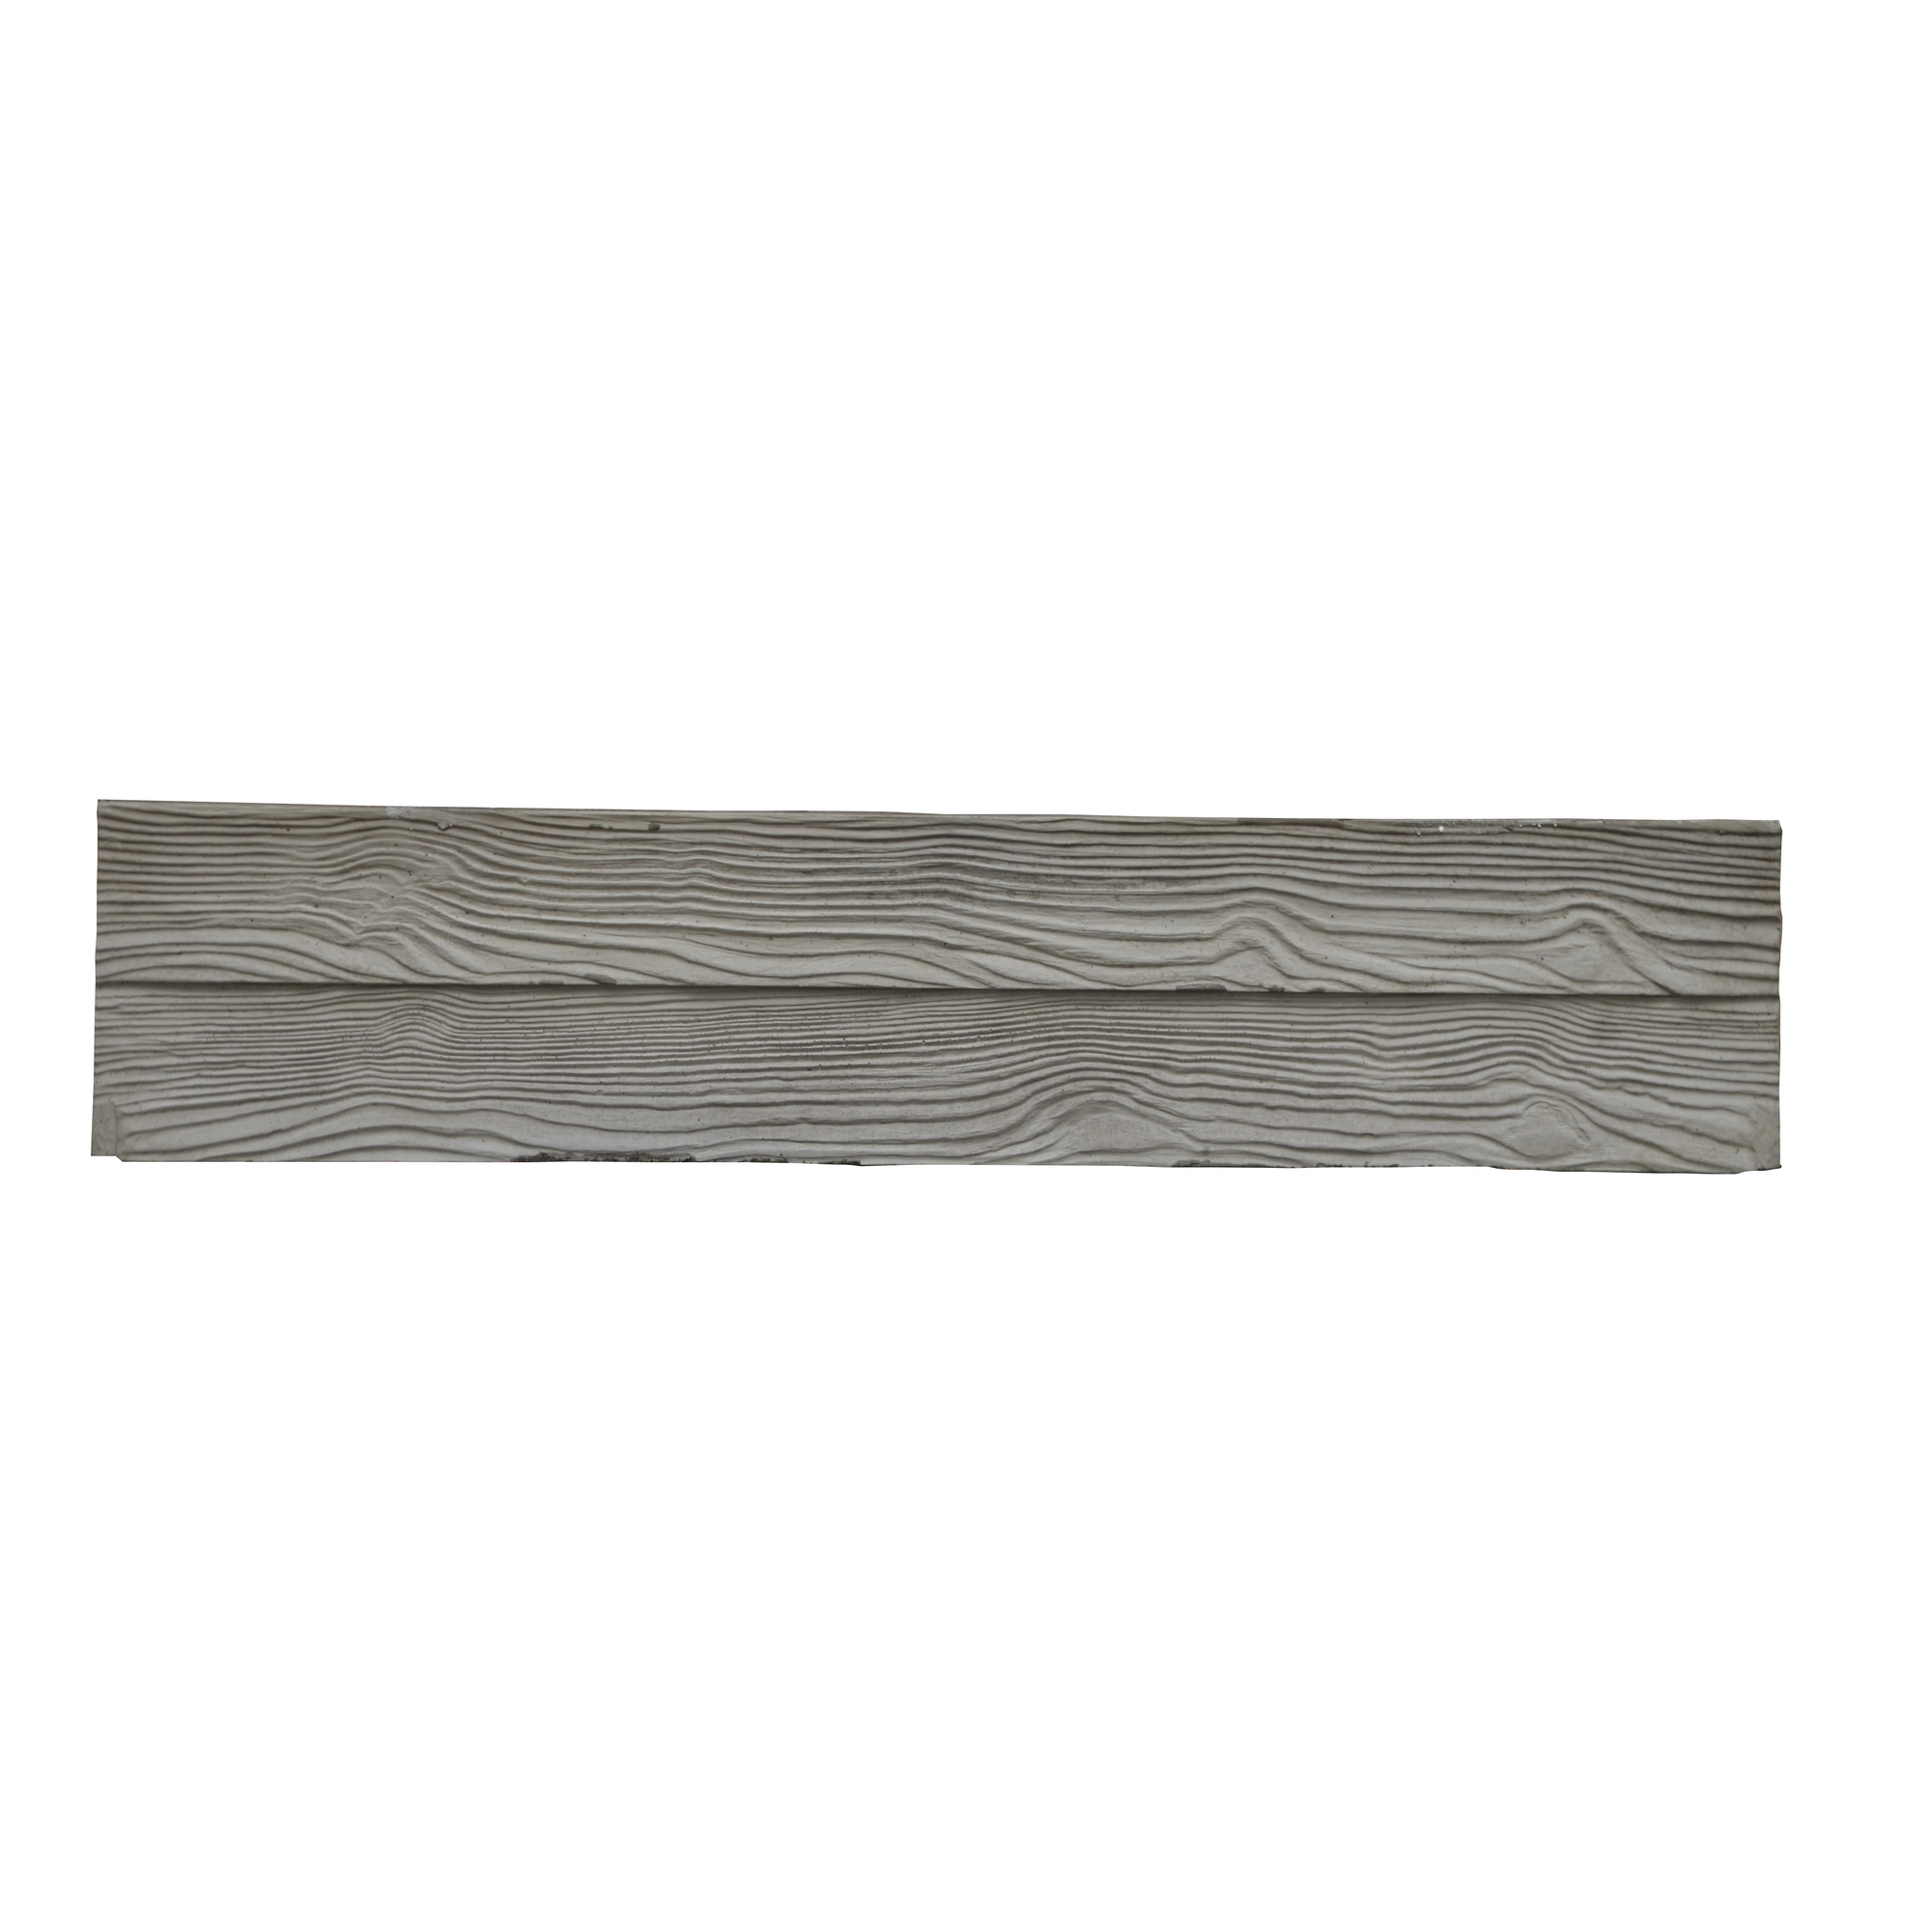 Betonzaunplatte 'Mediterran Waldholz' 144 x 30 x 4 cm grau + product picture